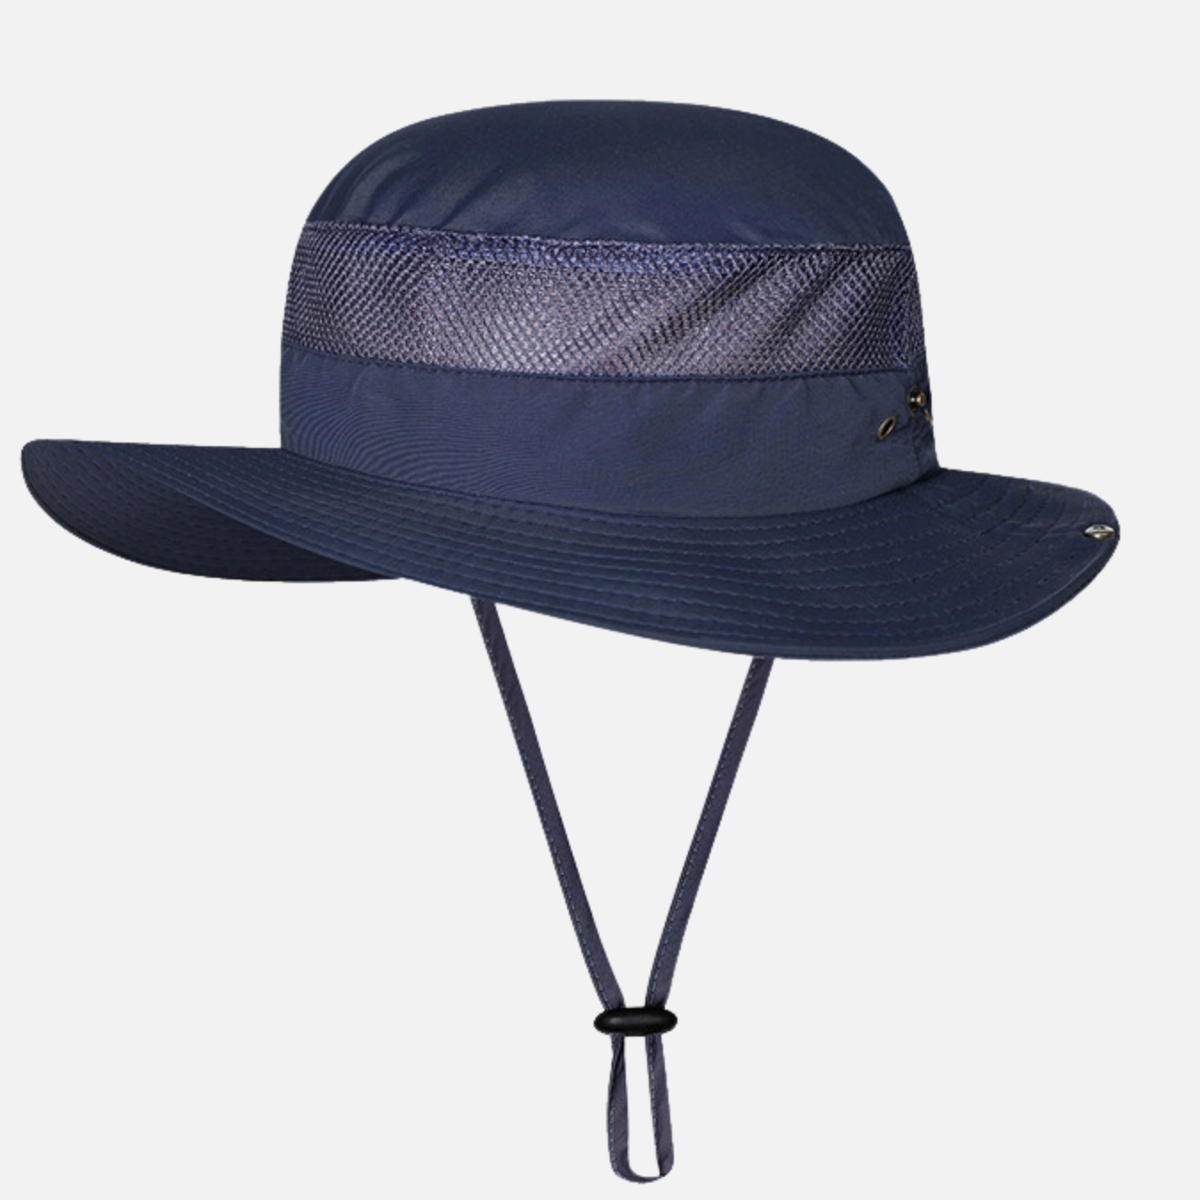 Voyage כובע טיולים רחב שוליים - כחול כהה פריט שני ב - 35% הנחה 